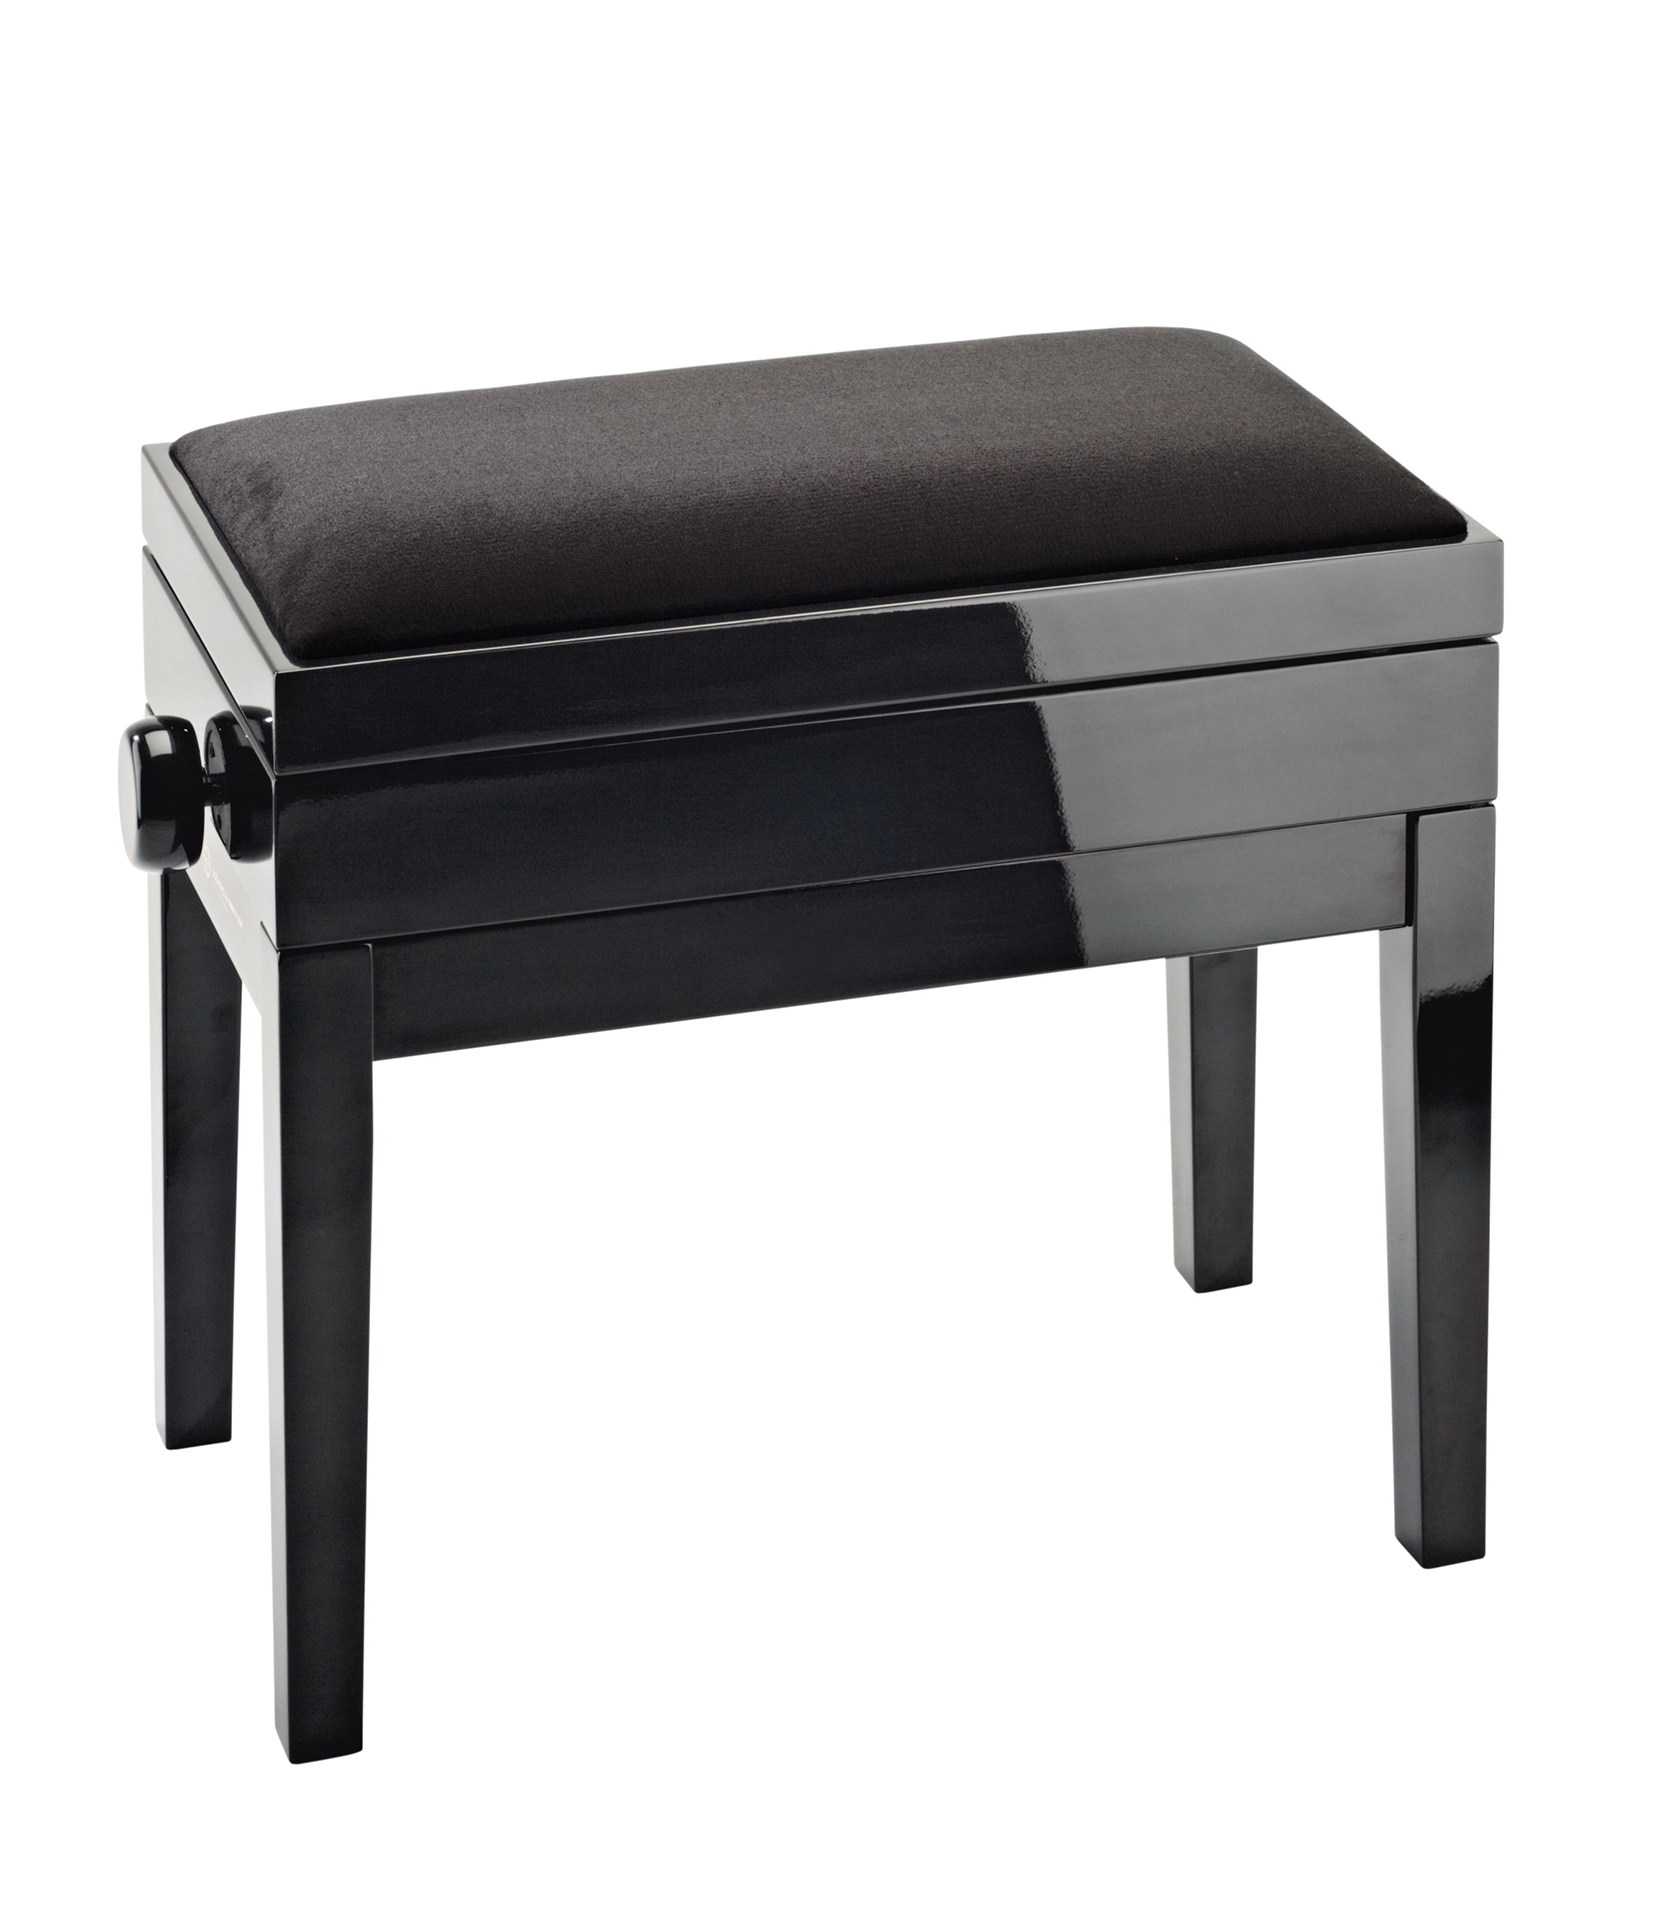 K&M - 13950 100 21 Piano bench with sheet music storage